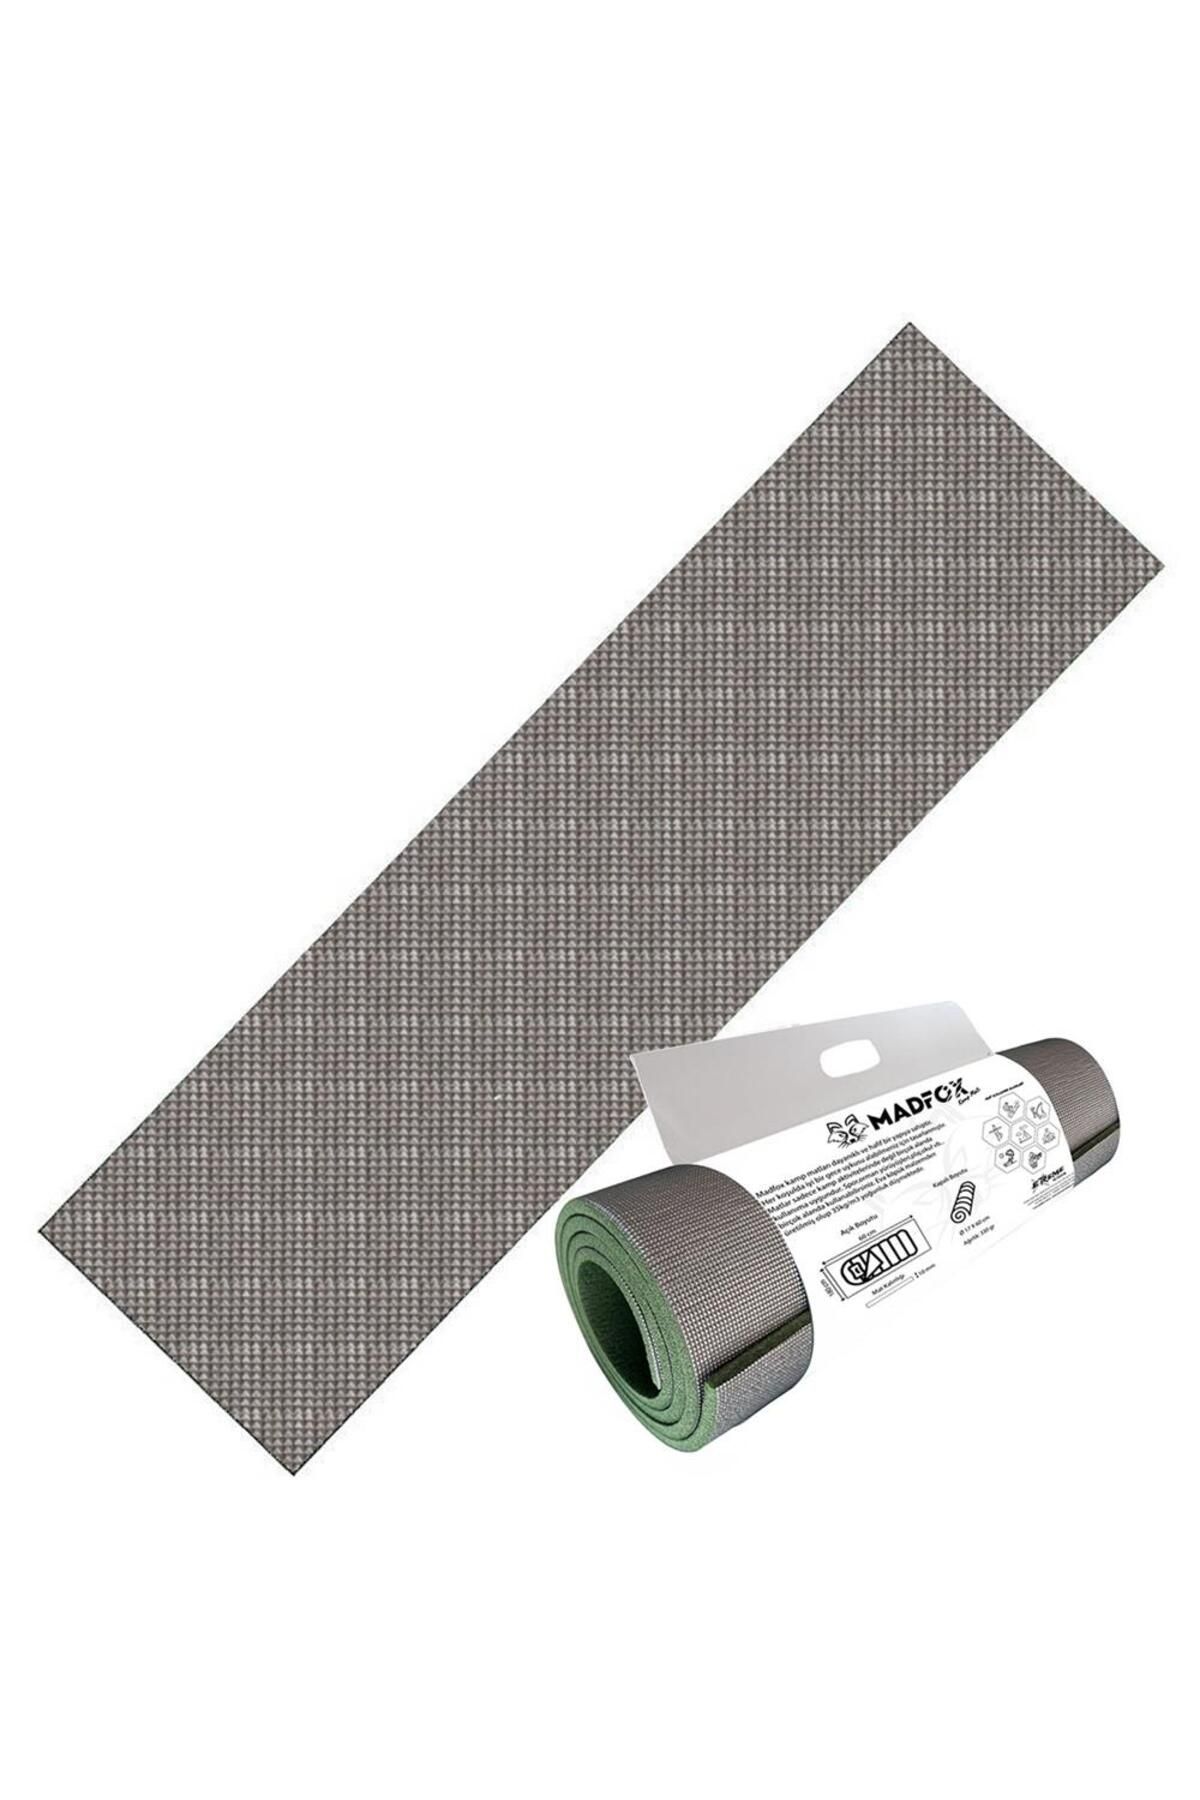 MADFOX Thermic Prolight Insulated Kamp Matı [ Gri/Yeşil | 180*60cm-10mm | XPE-35 ]